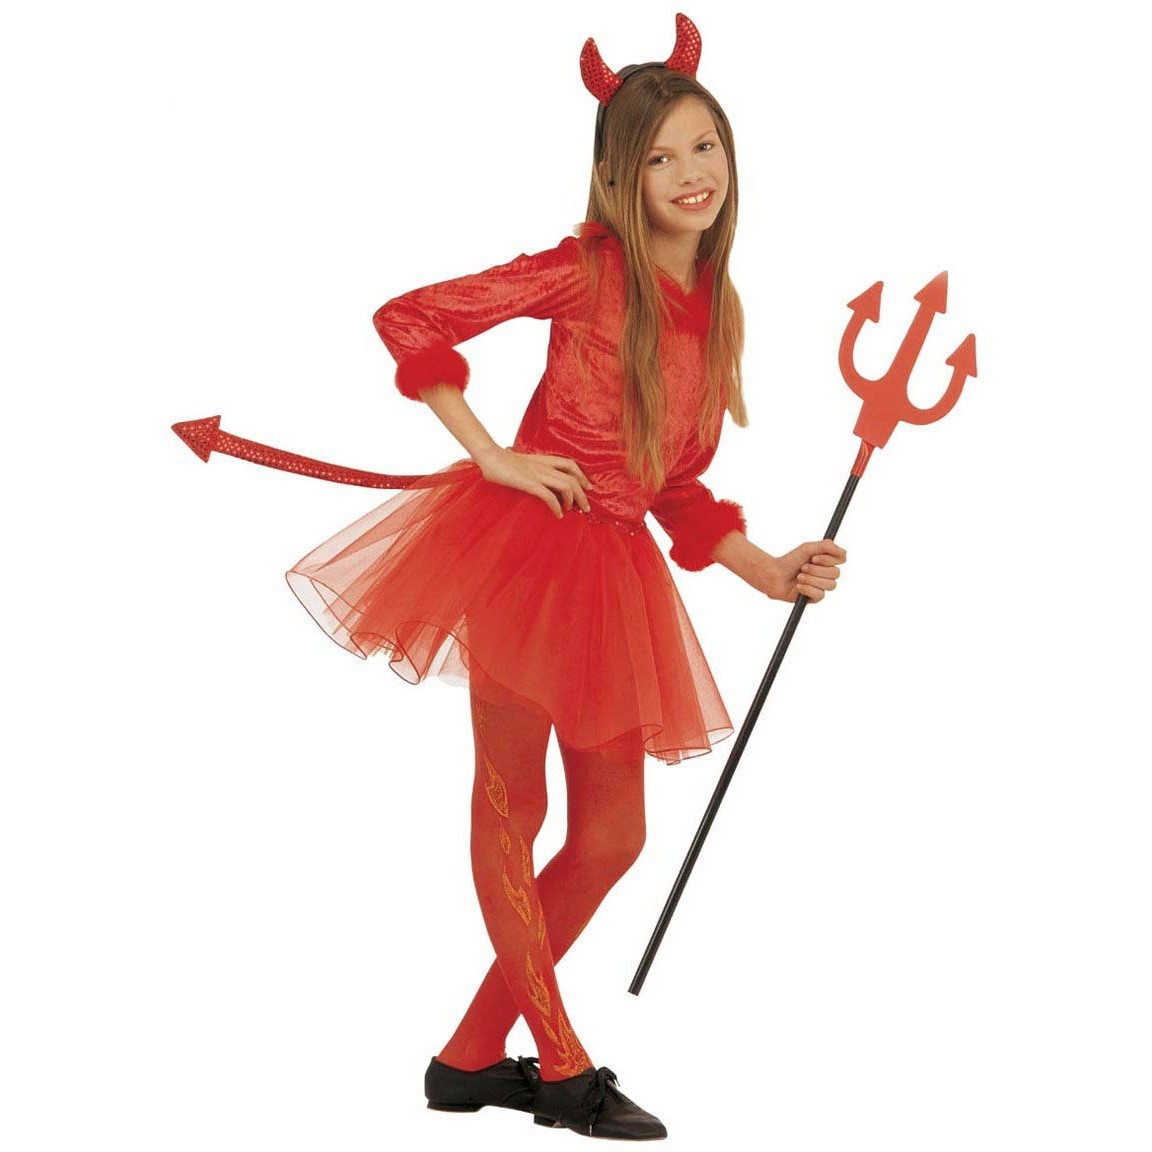 FM Teufelshörner Hörner zum Teufel Kostüm an Halloween Karneval 